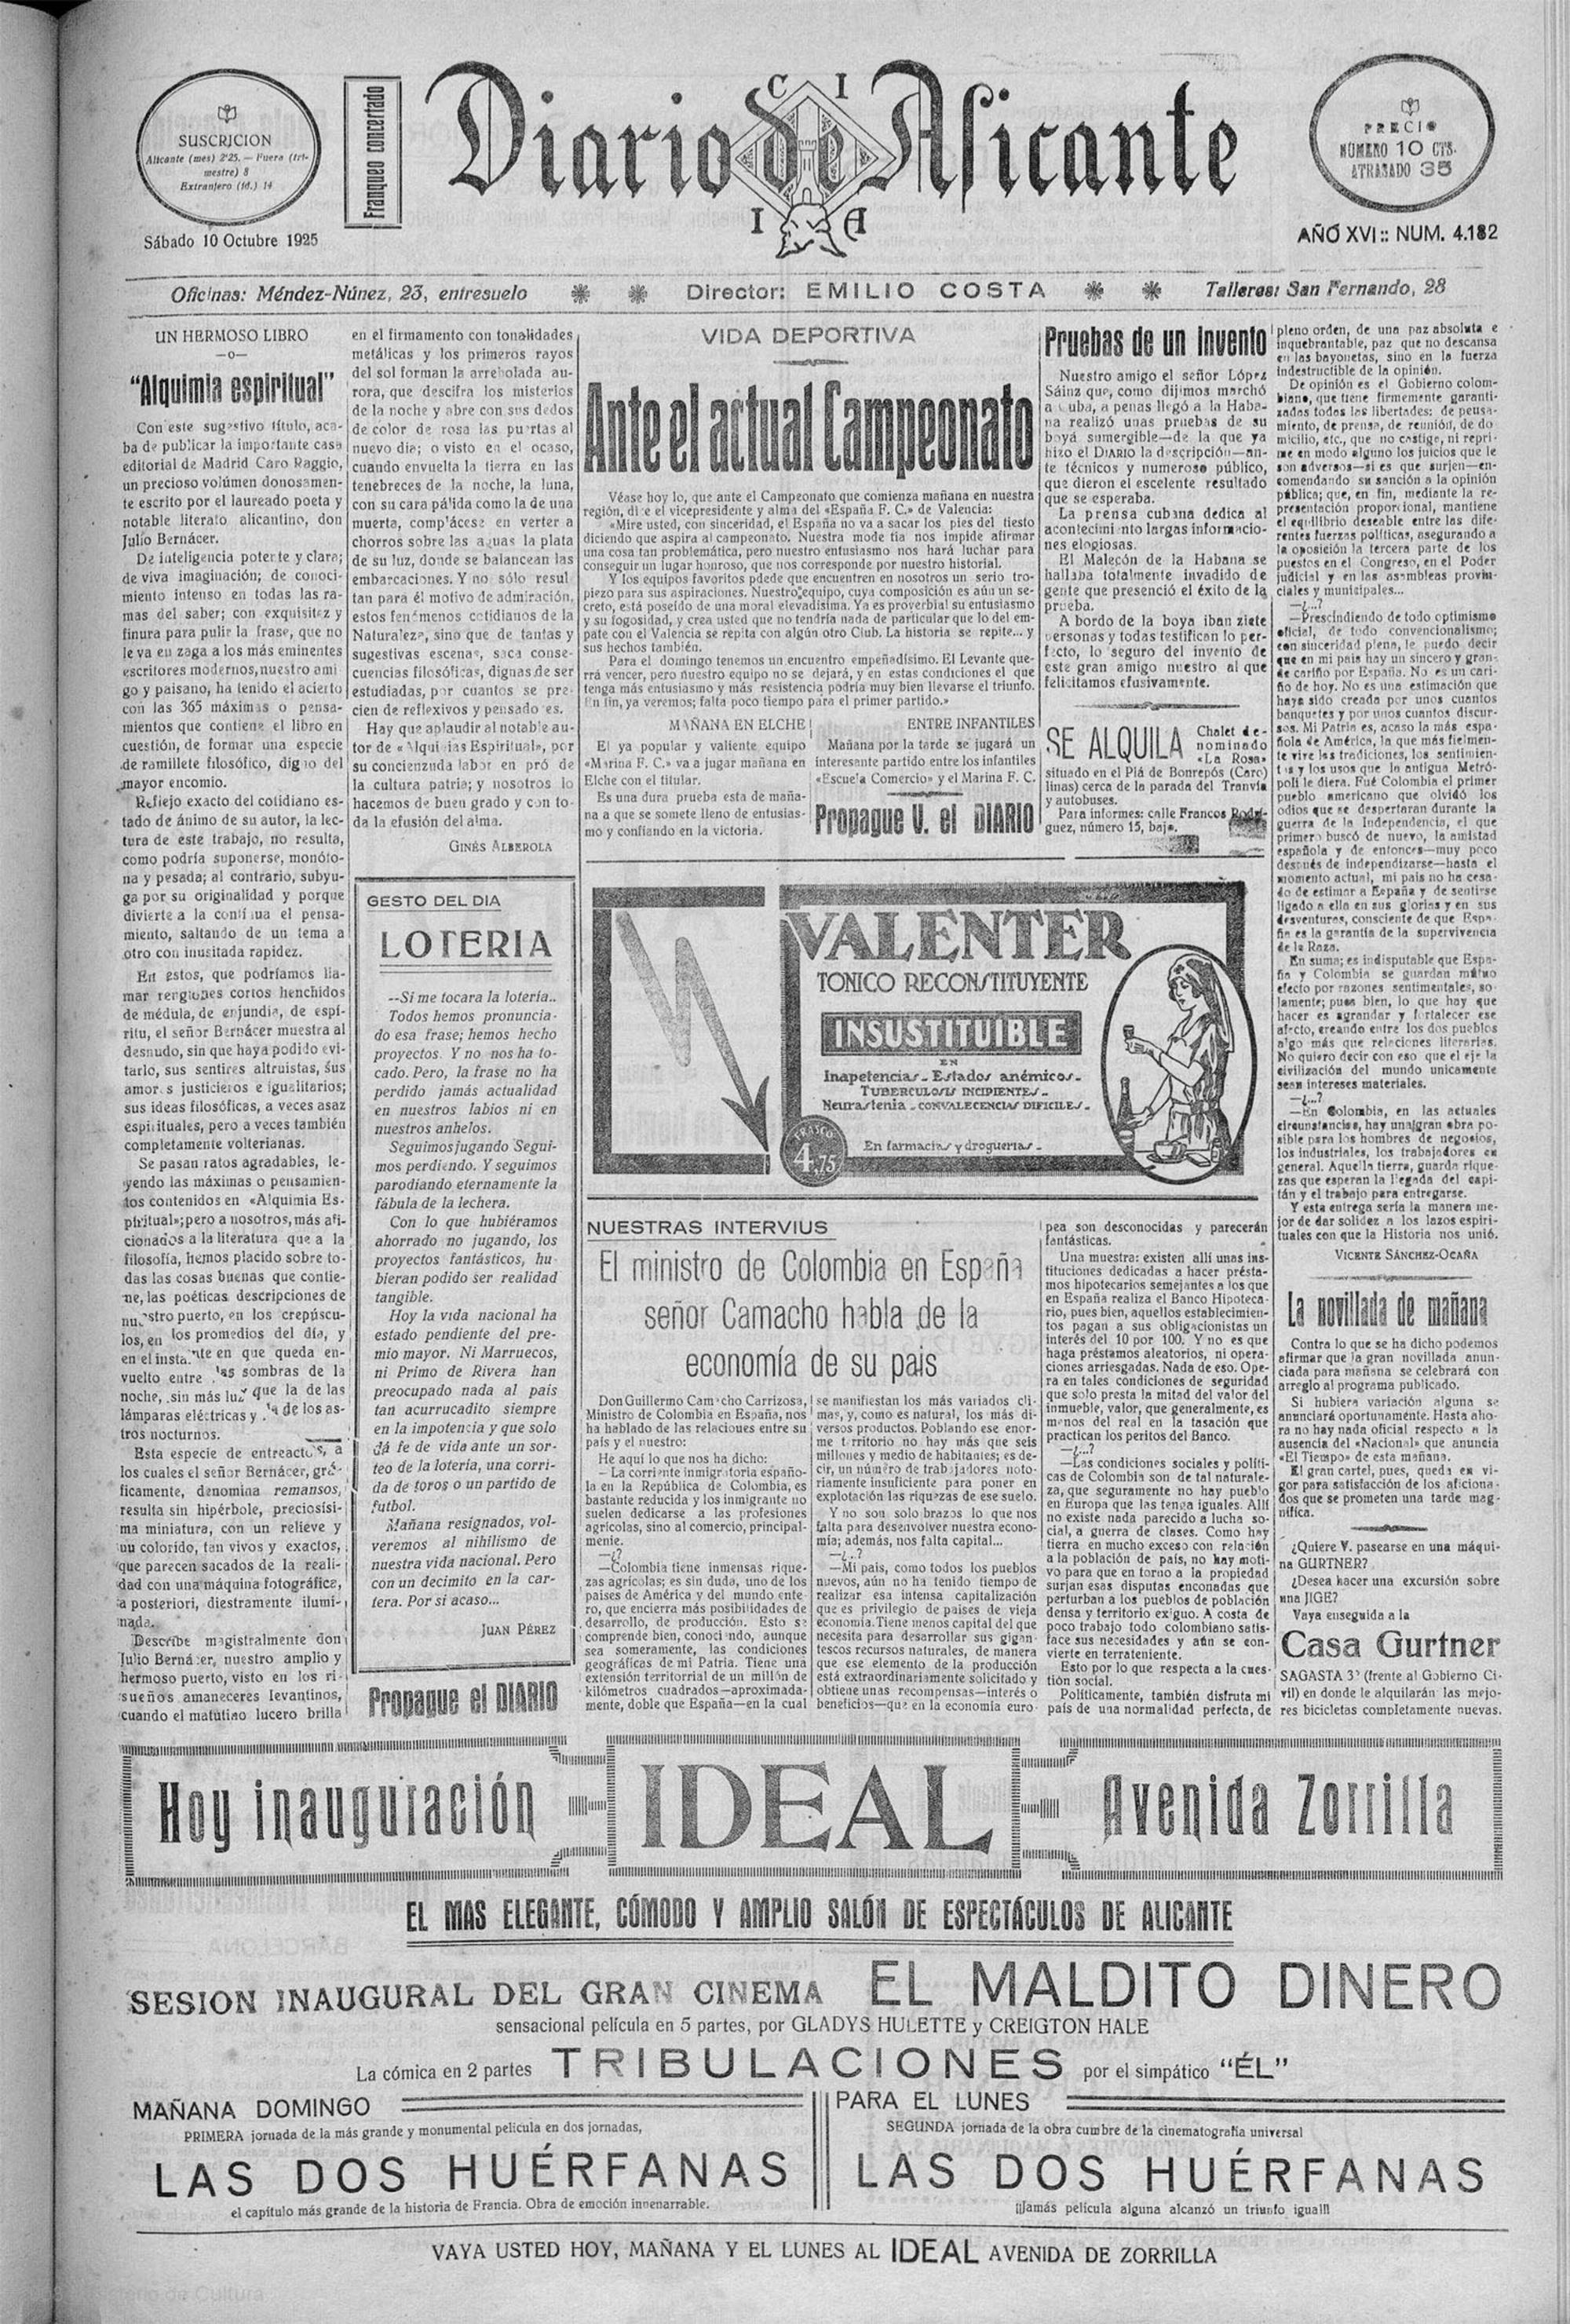 Diario Alicante 1925 Cine Ideal